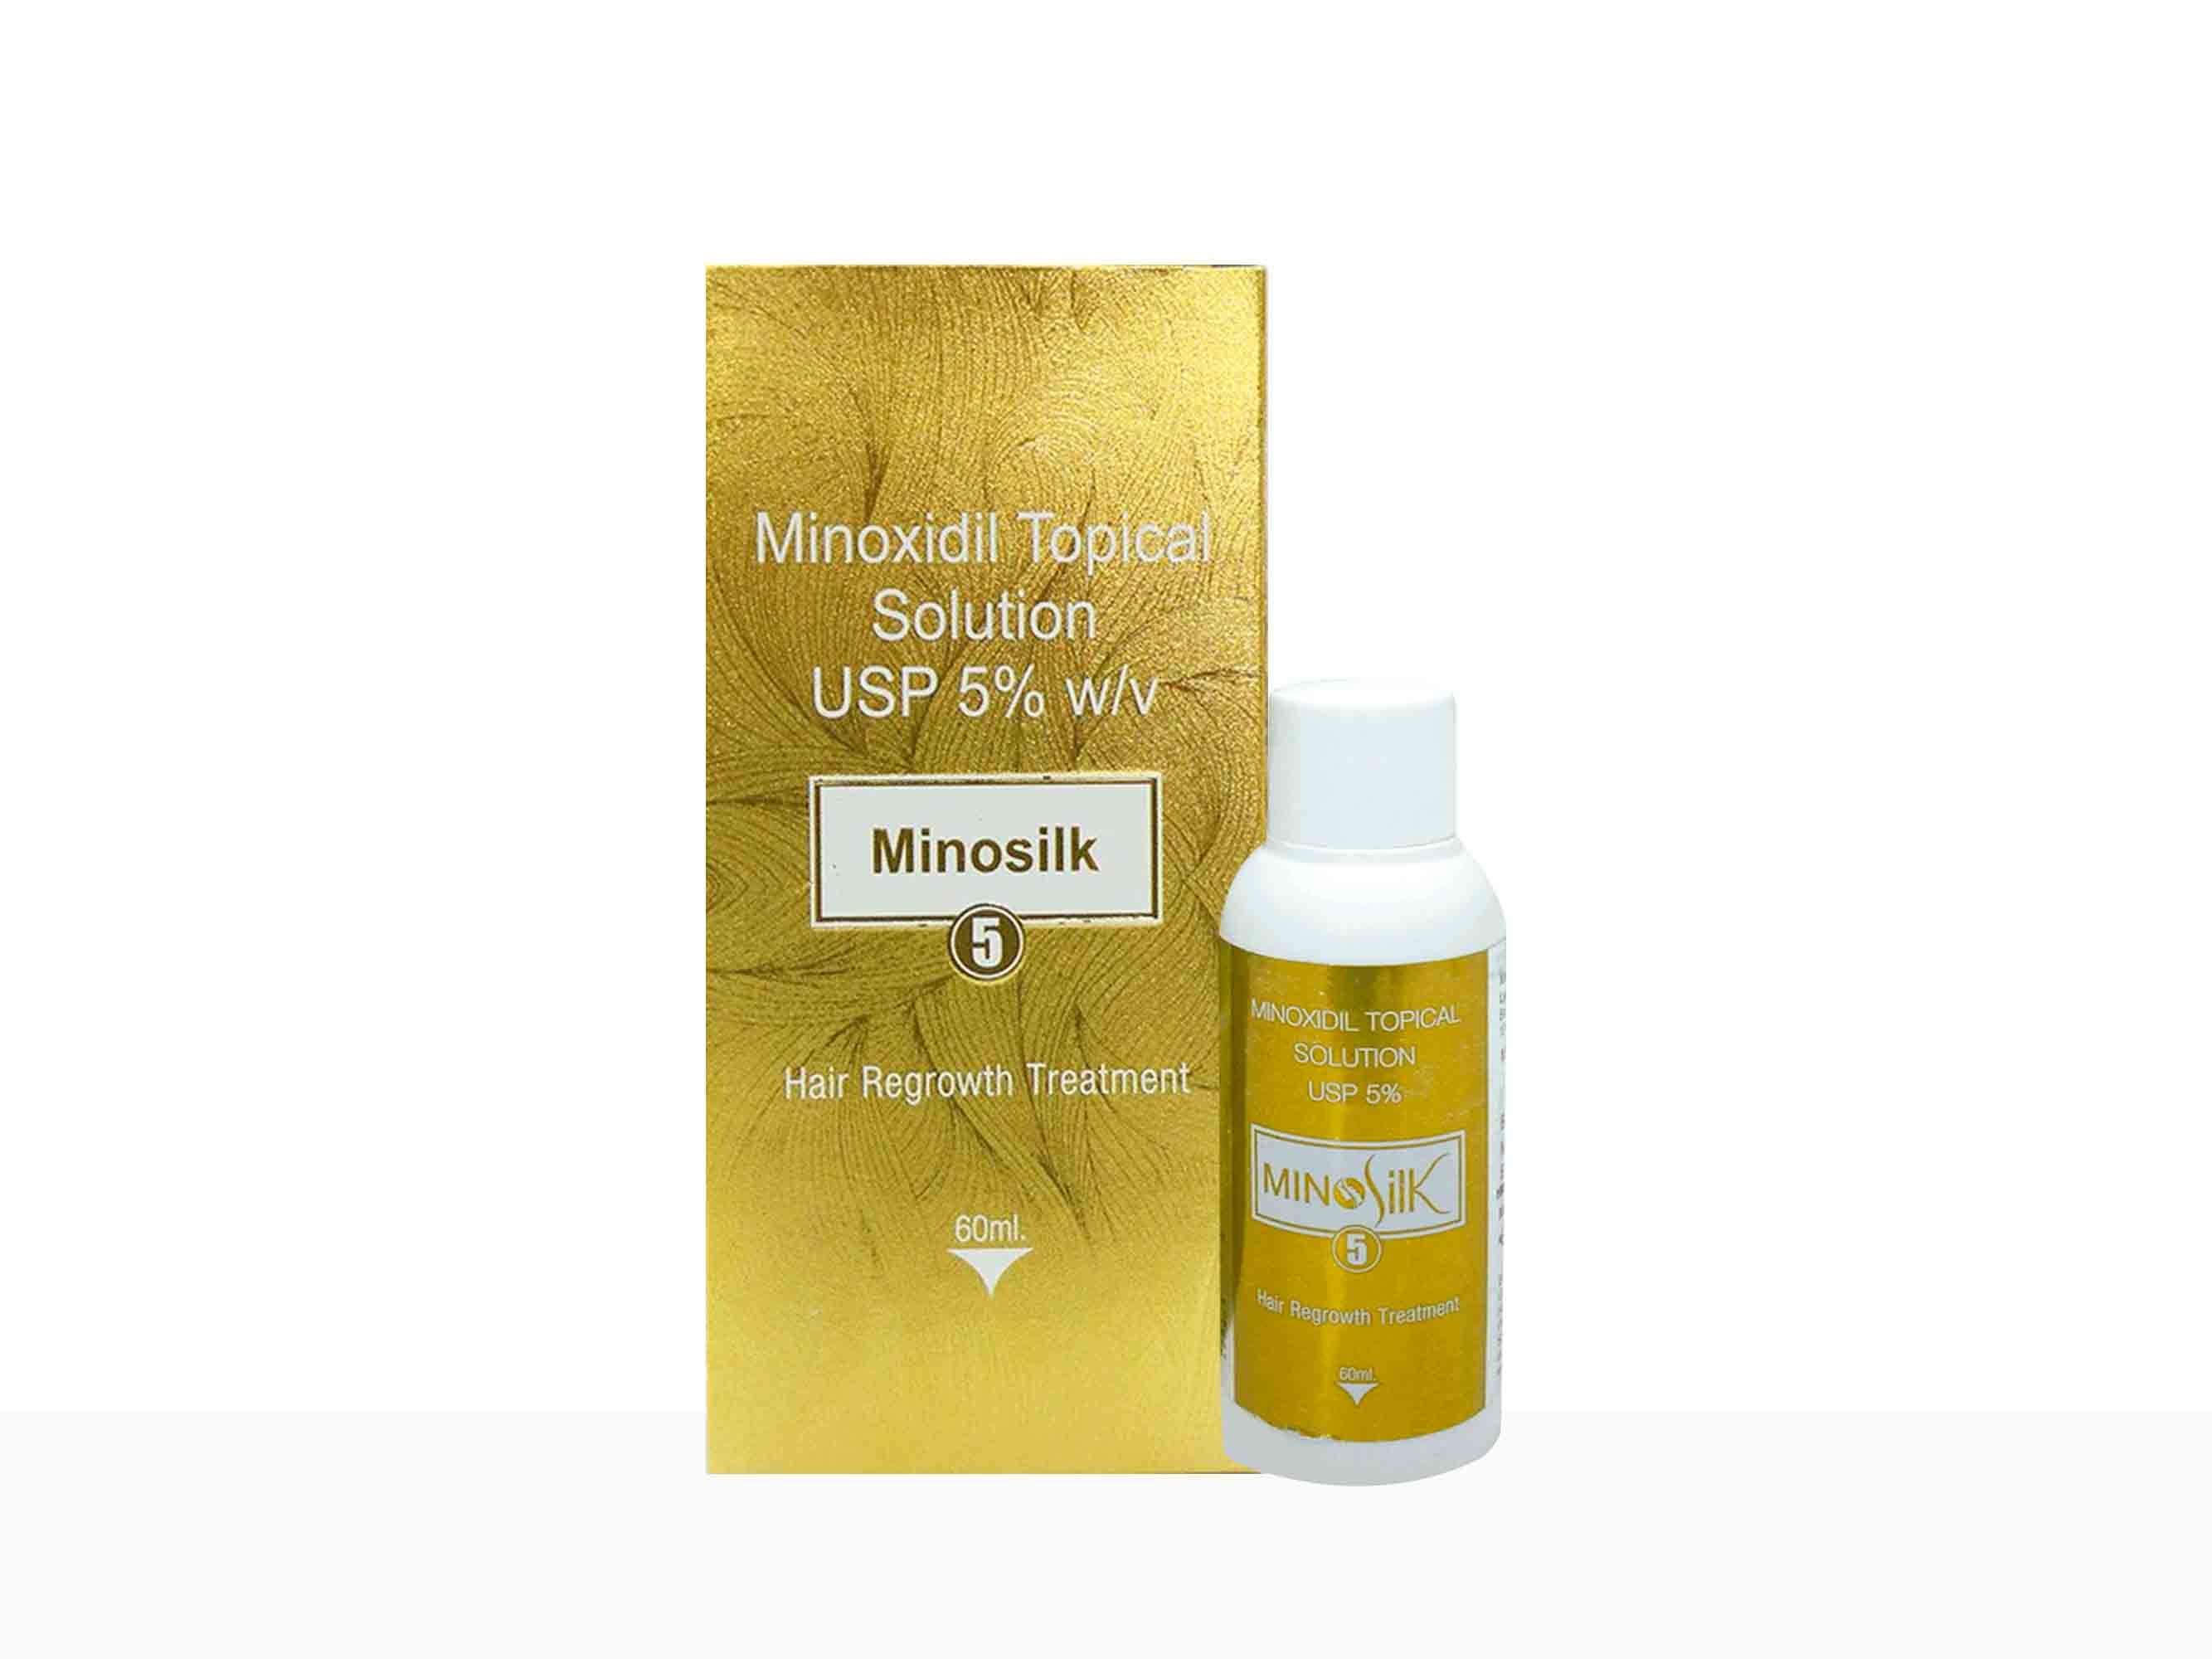 Minosilk 5 Topical Solution